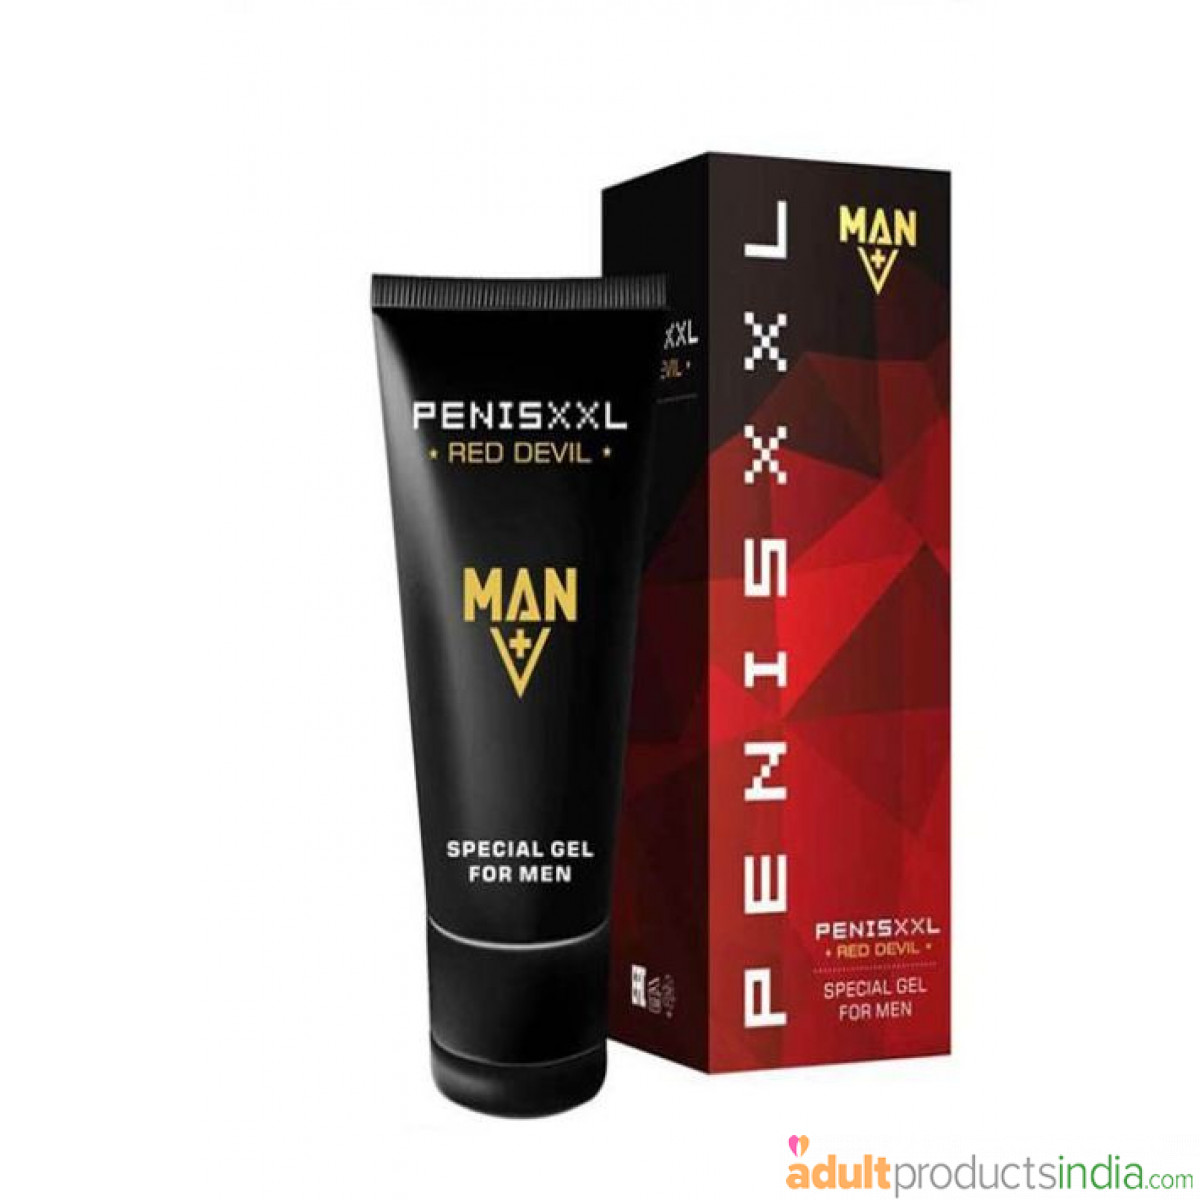 Penis XXl Special Gel For Men